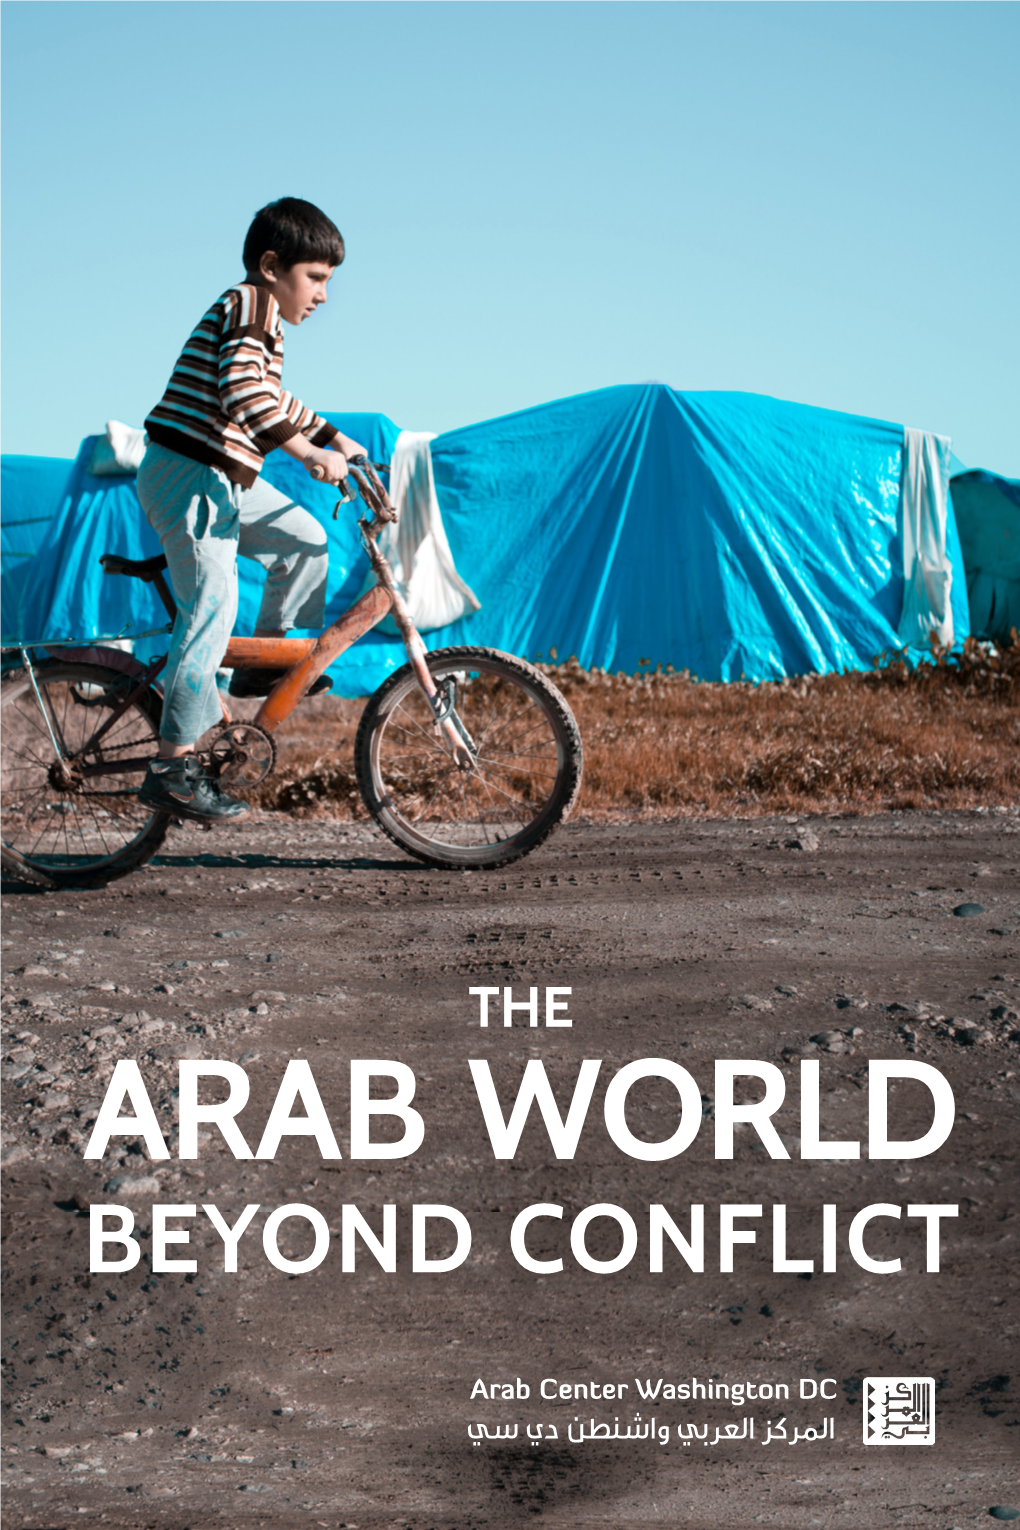 ARAB WORLD BEYOND CONFLICT Copyright © 2019 Arab Center Washington DC, Inc